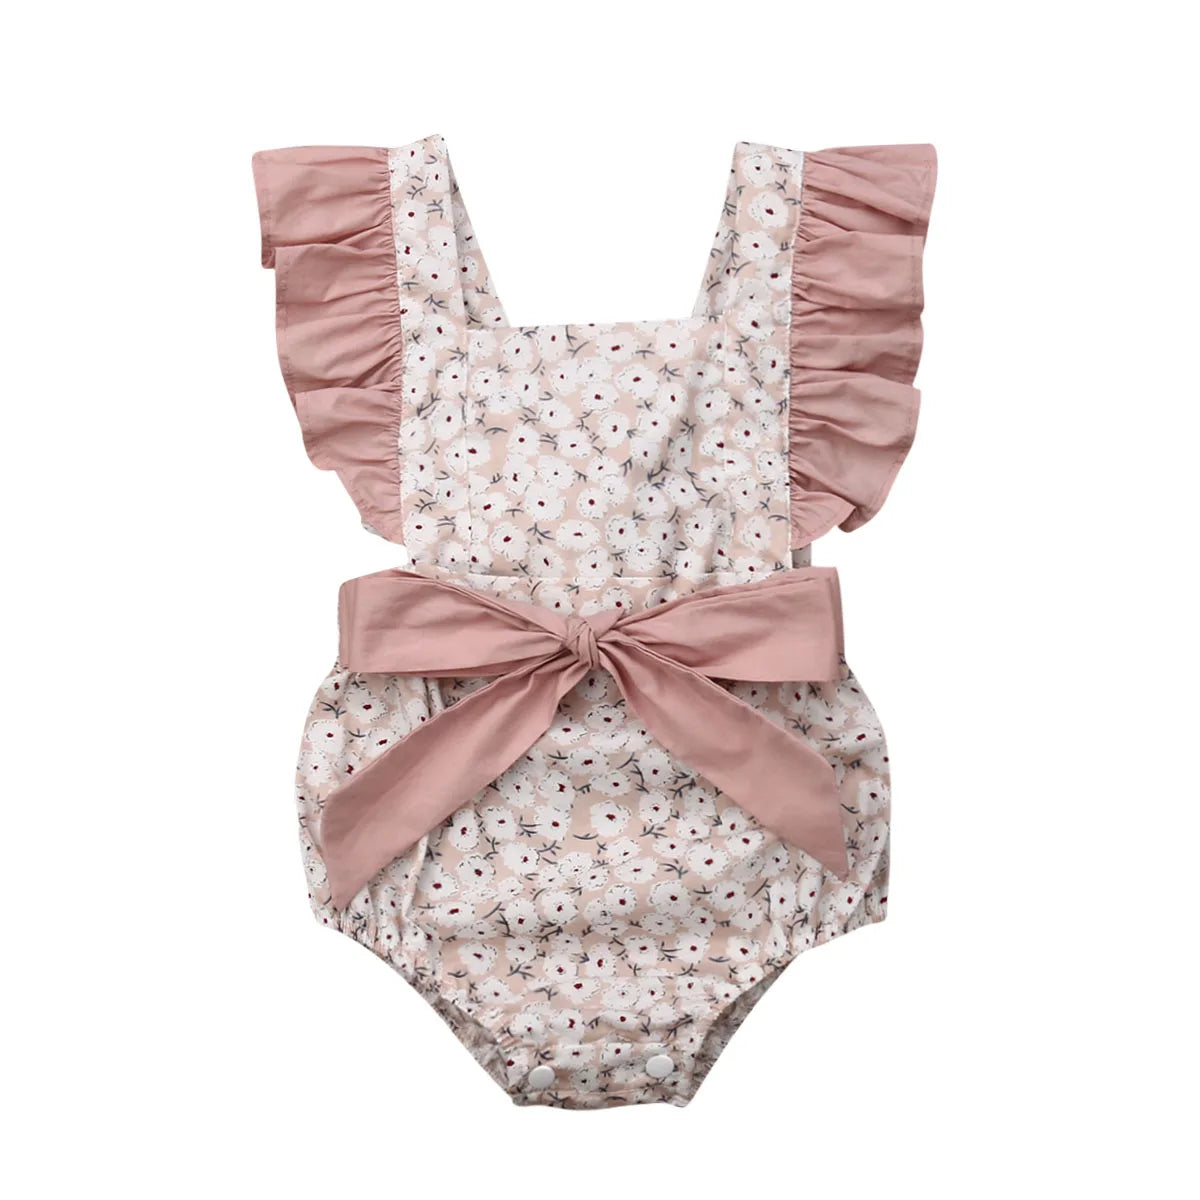 0-24M Infant Baby Girls Floral Bow Romper Jumpsuit